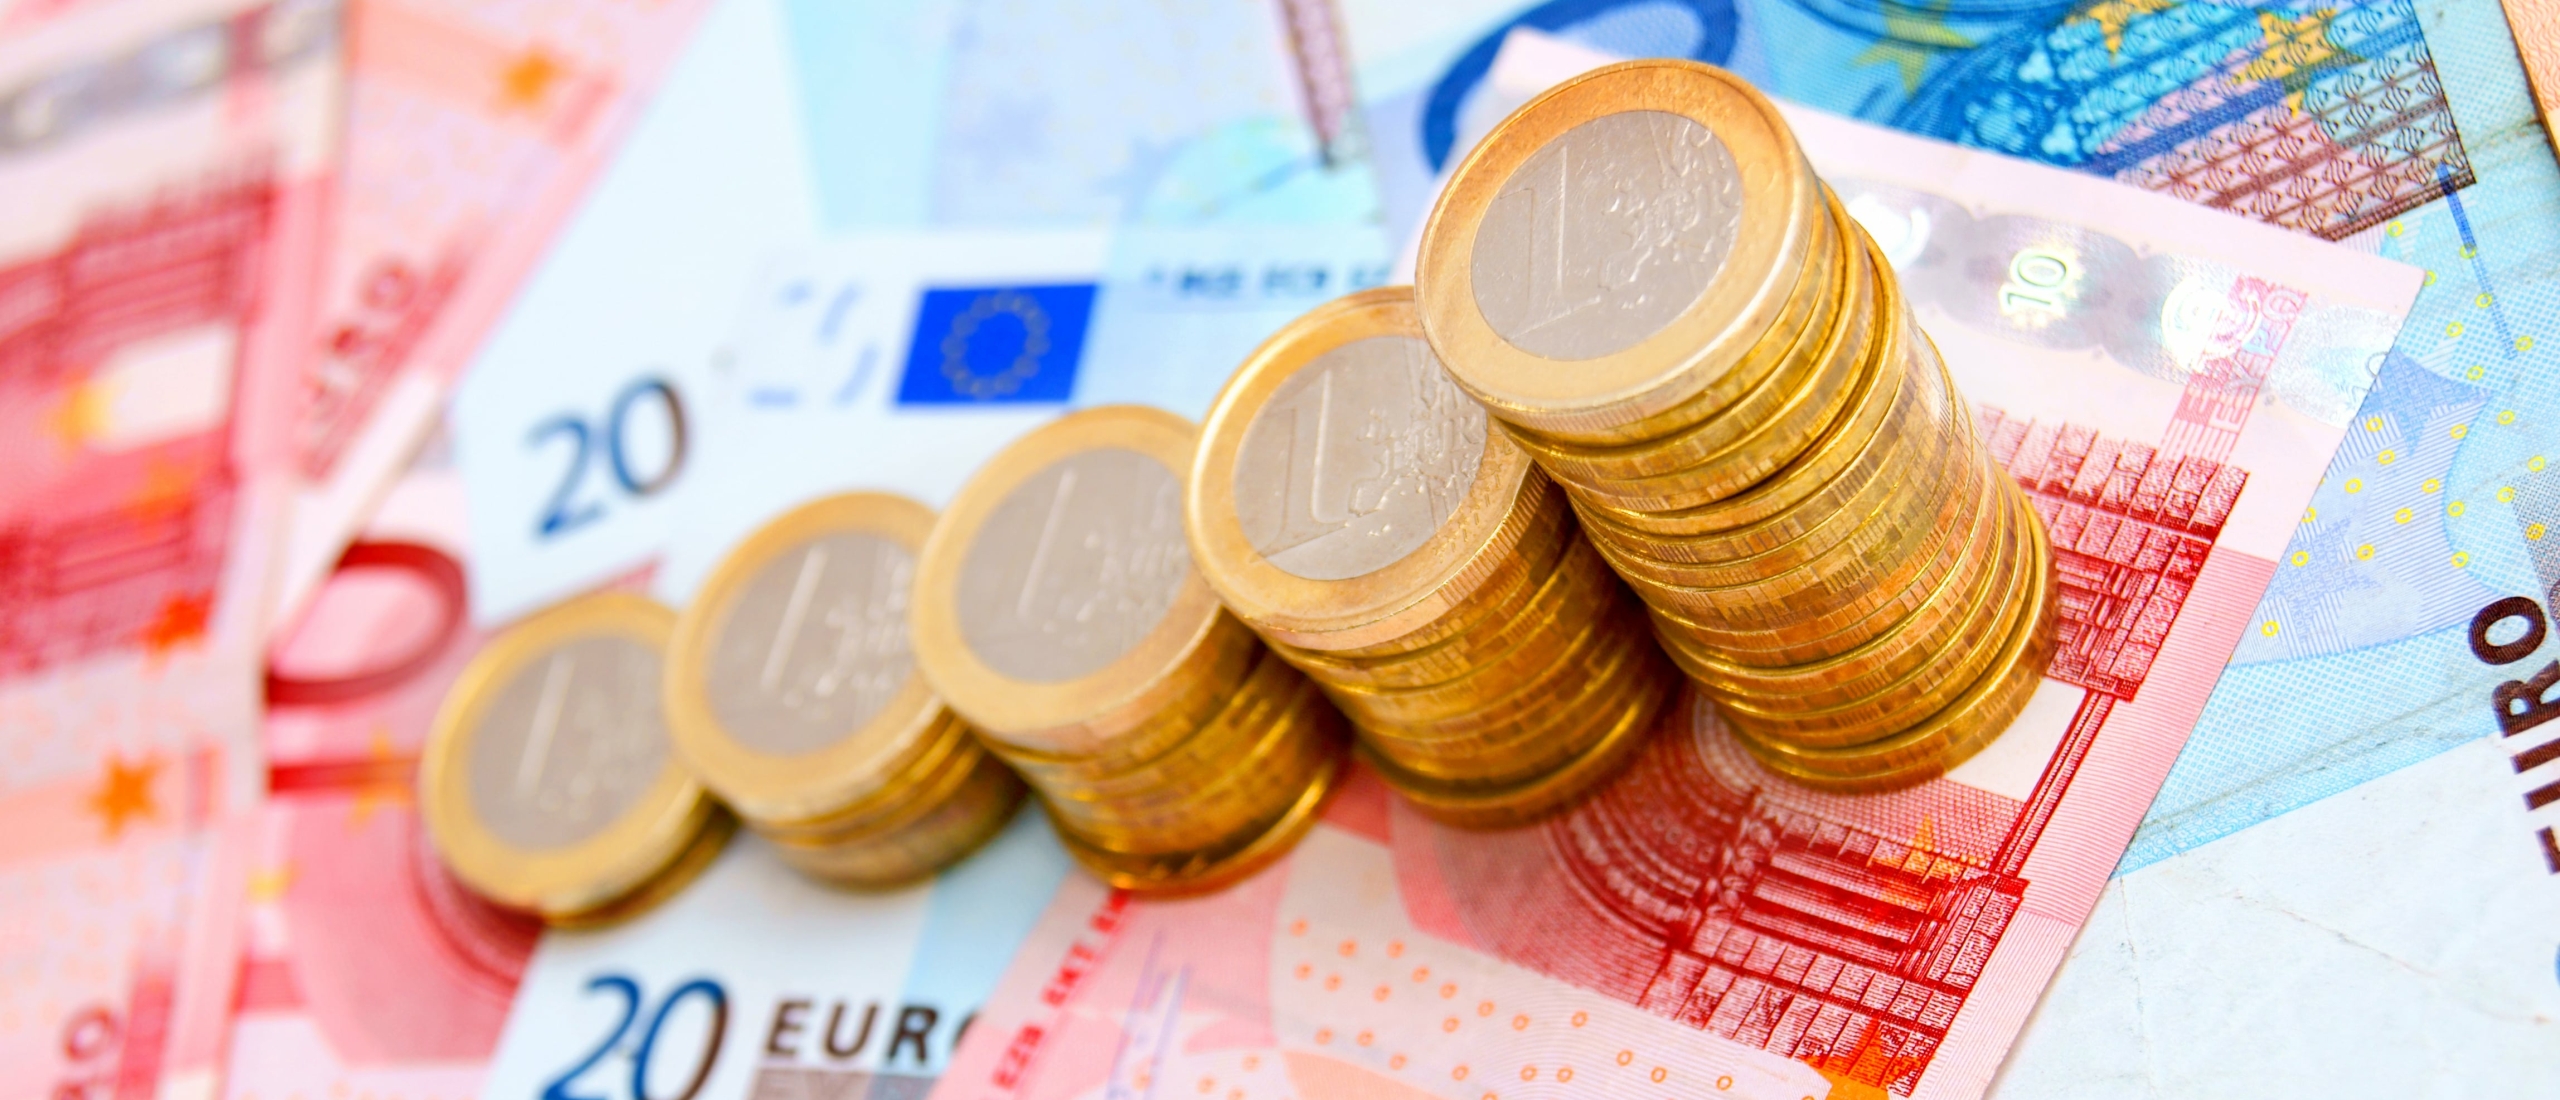 Dutch coins and billets